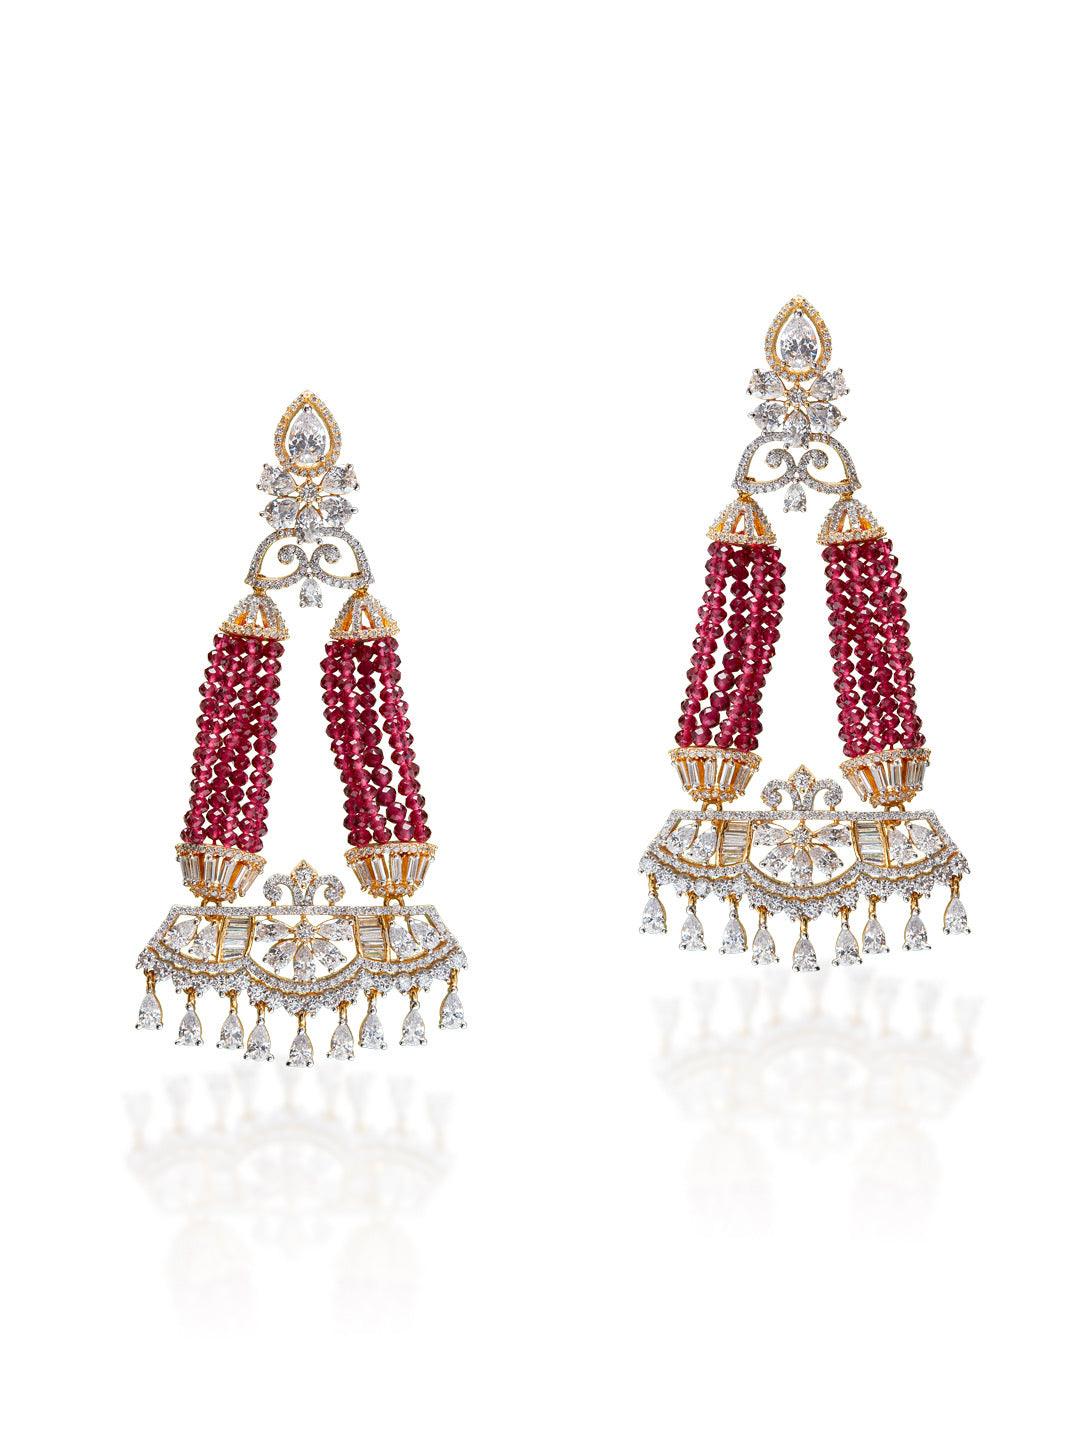 Beads Of Red Earrings - Default Title (FEC01) 